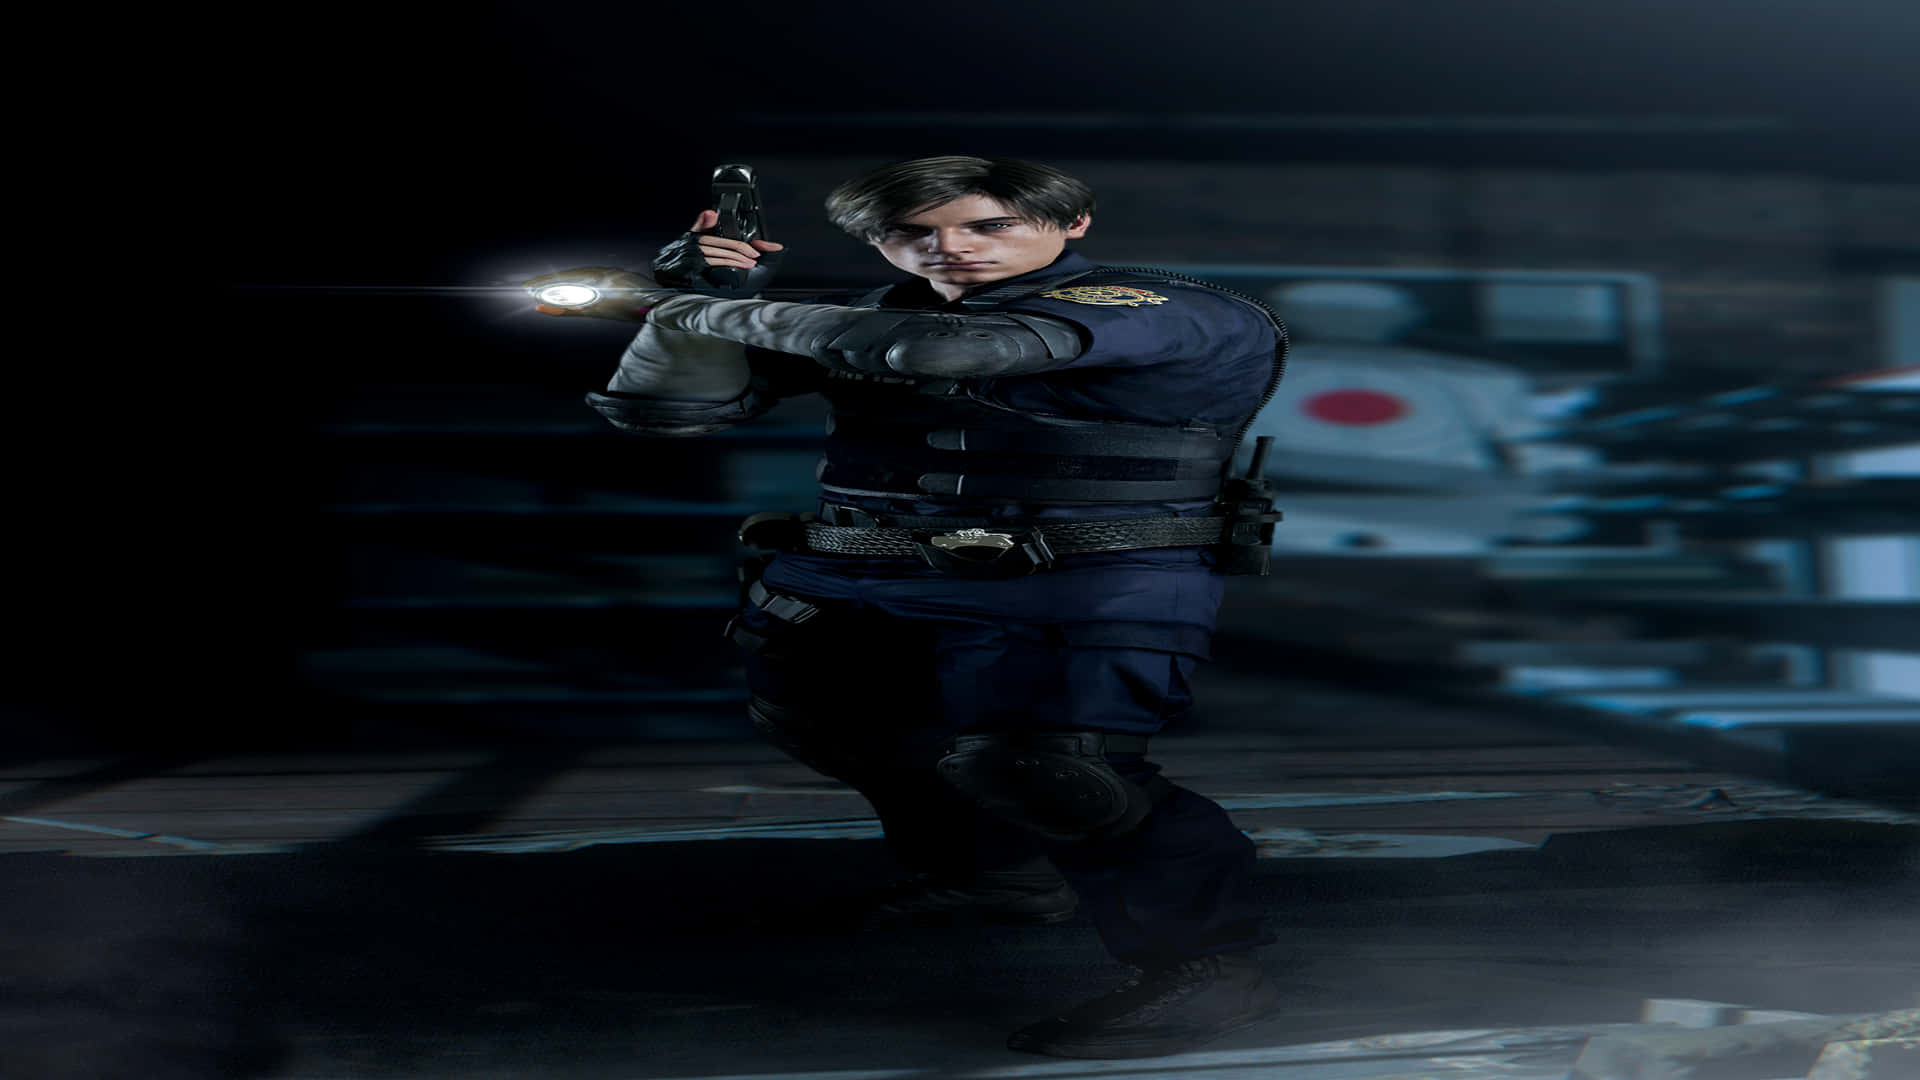 1920x1080 Resident Evil 2 Background Leon Kennedy Flashlight And Gun Drawn